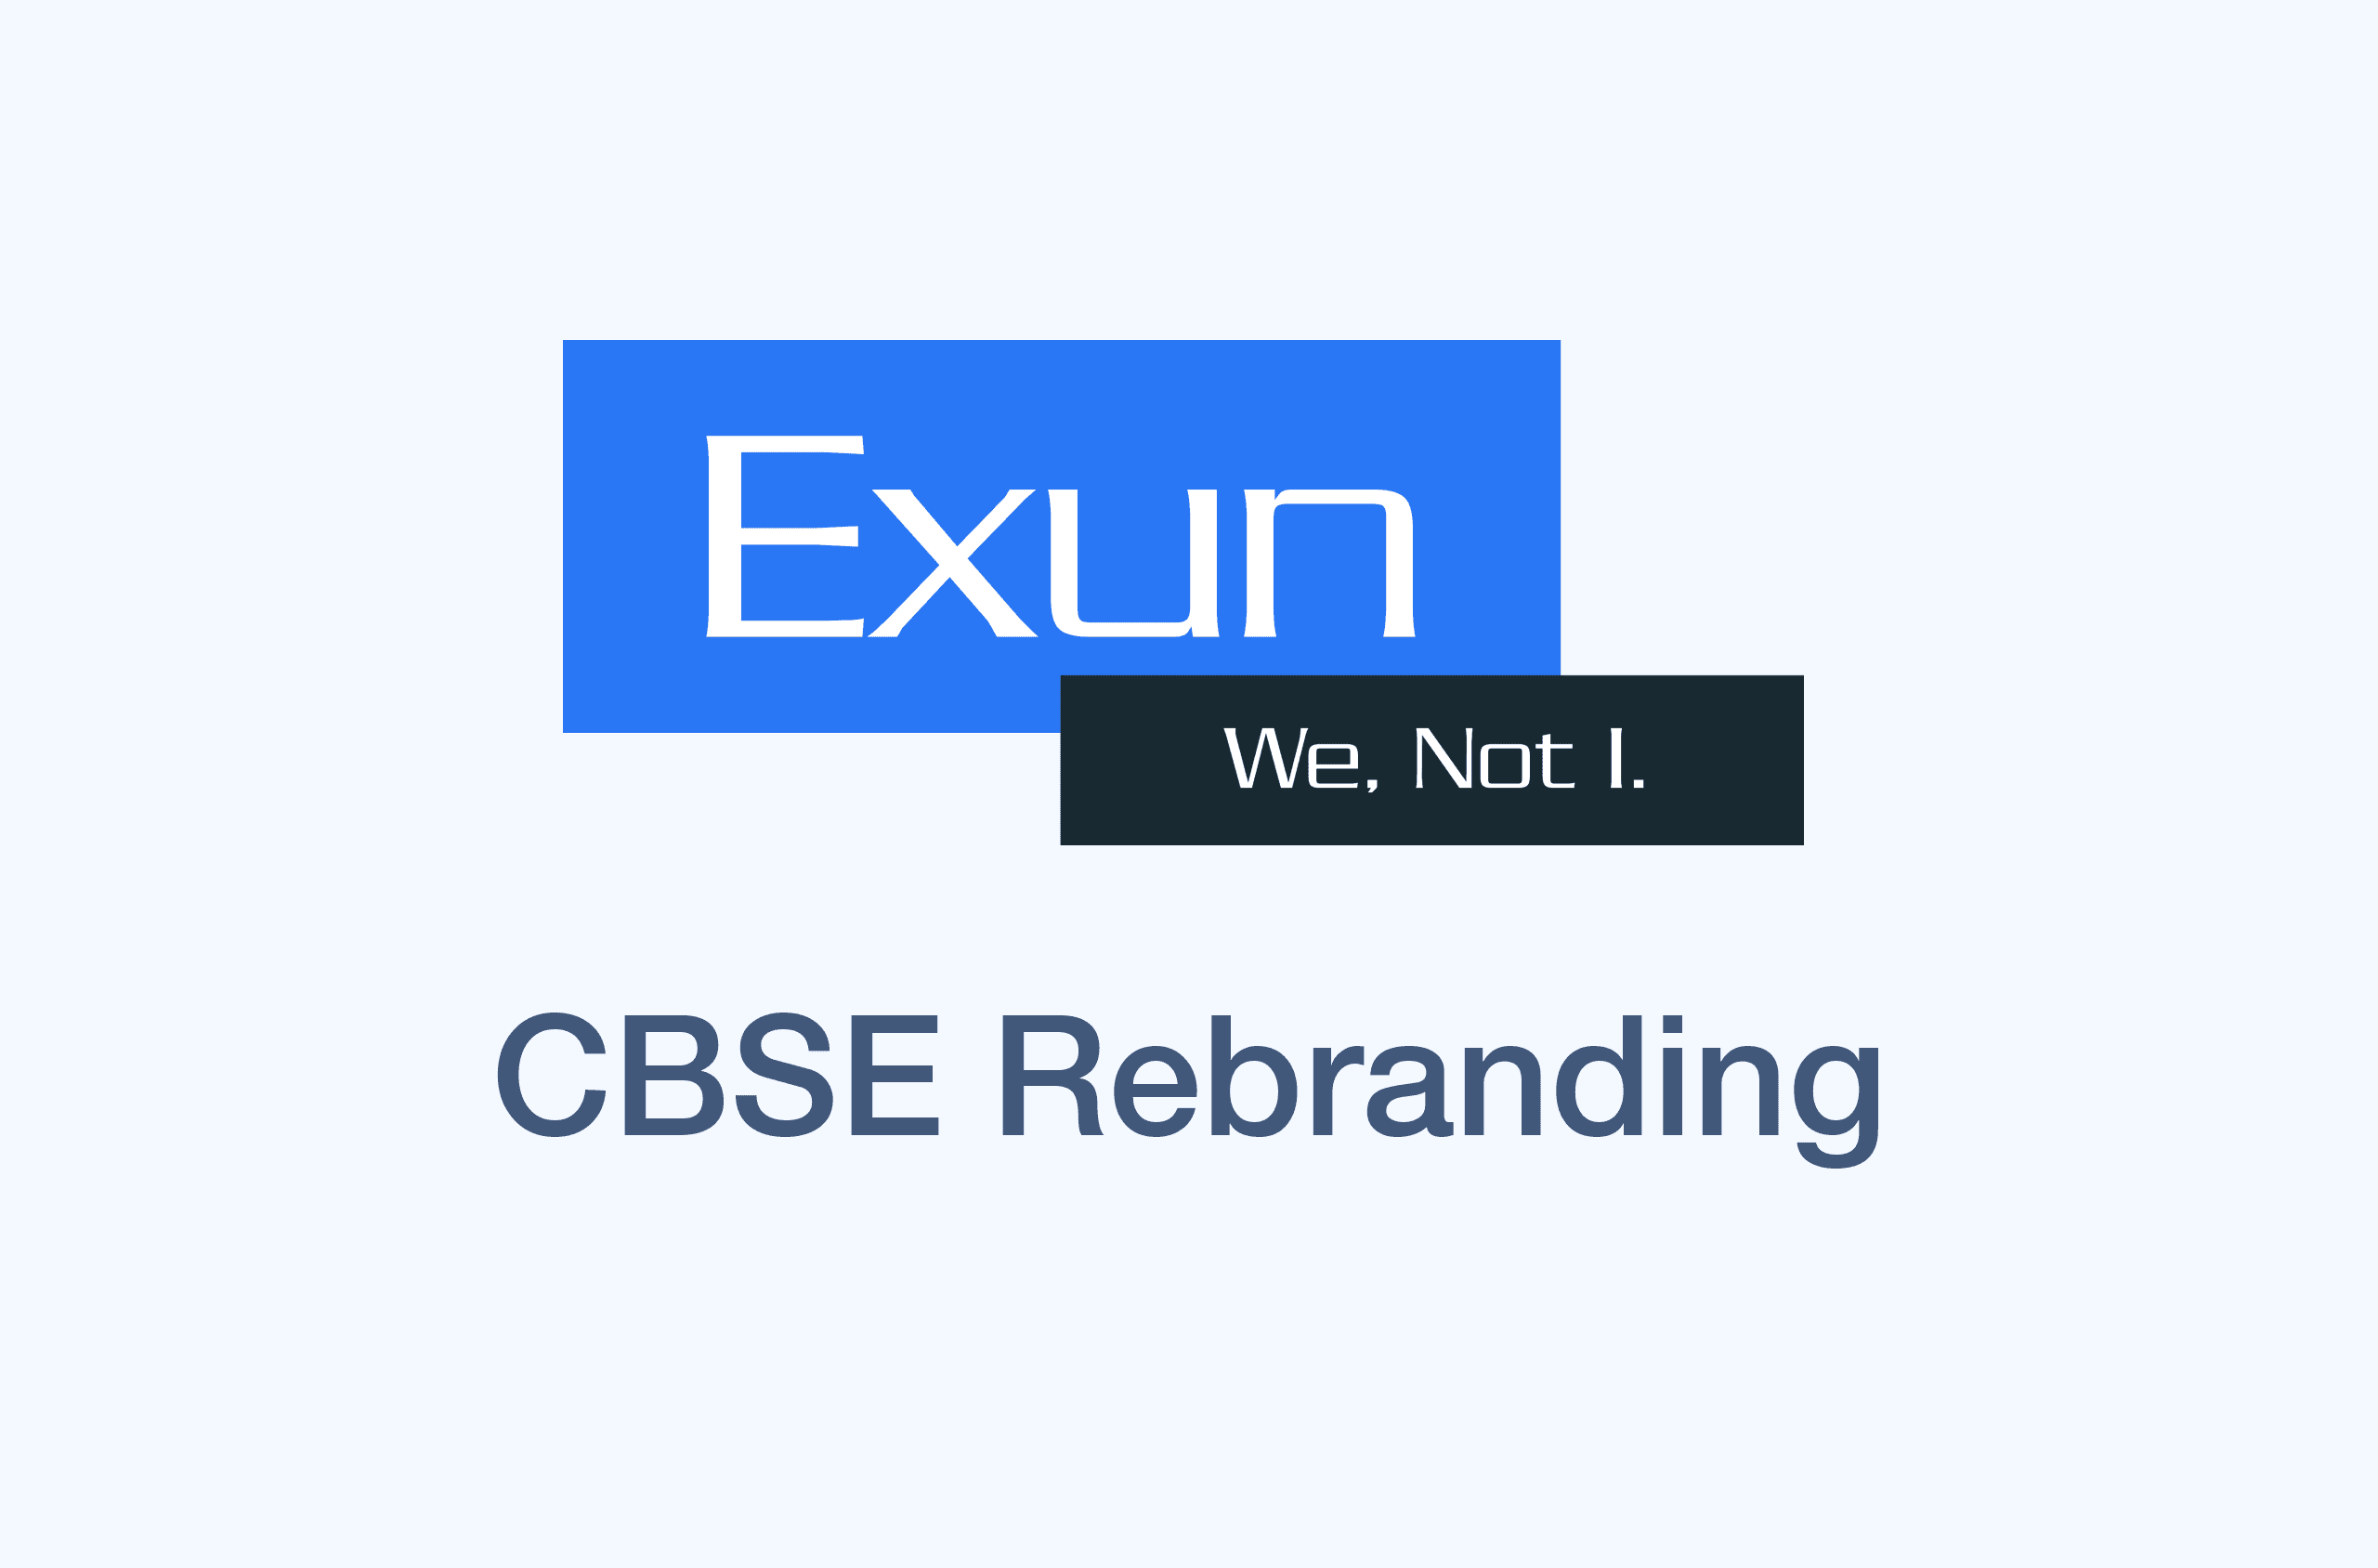 CBSE Rebranding's image